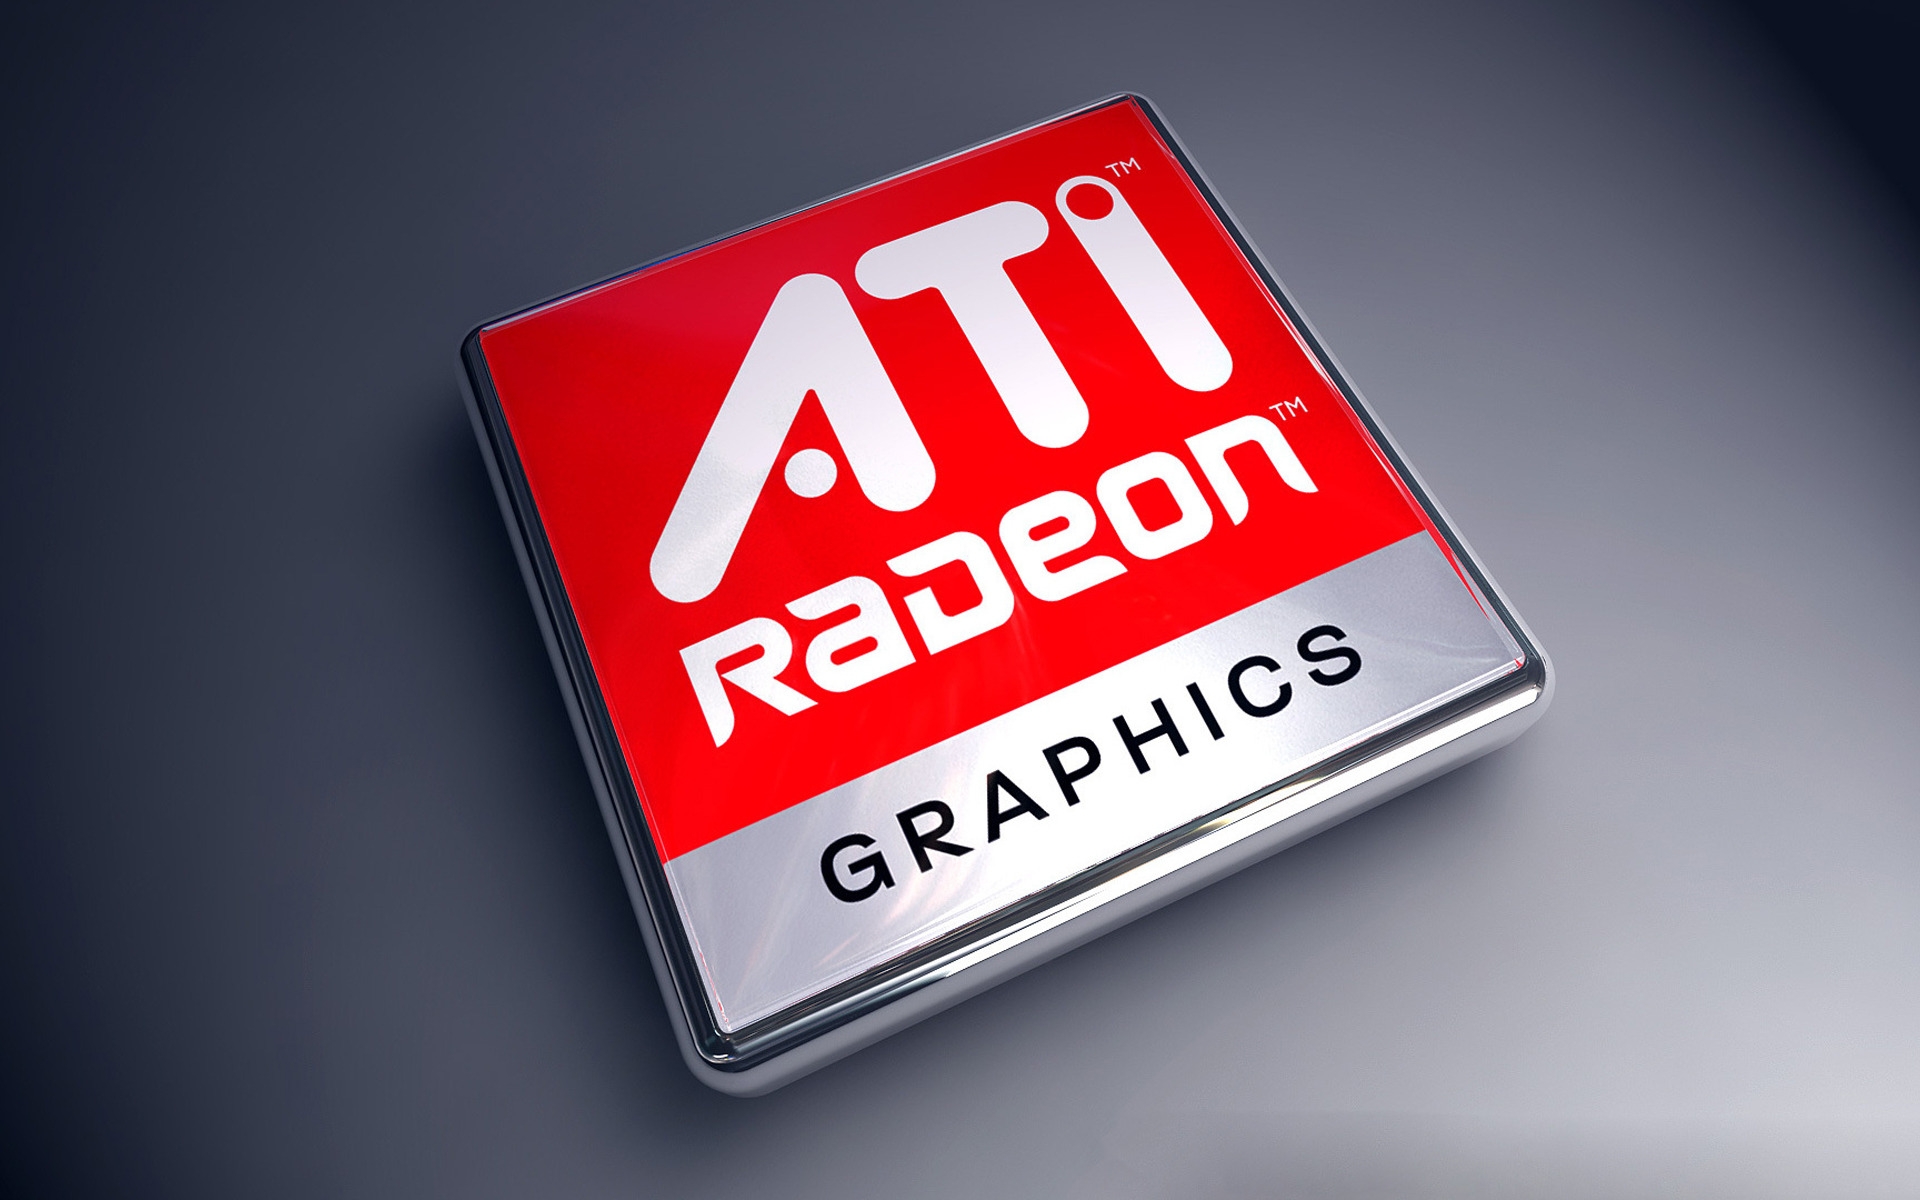 ATI Radeon Graphics for 1920 x 1200 widescreen resolution